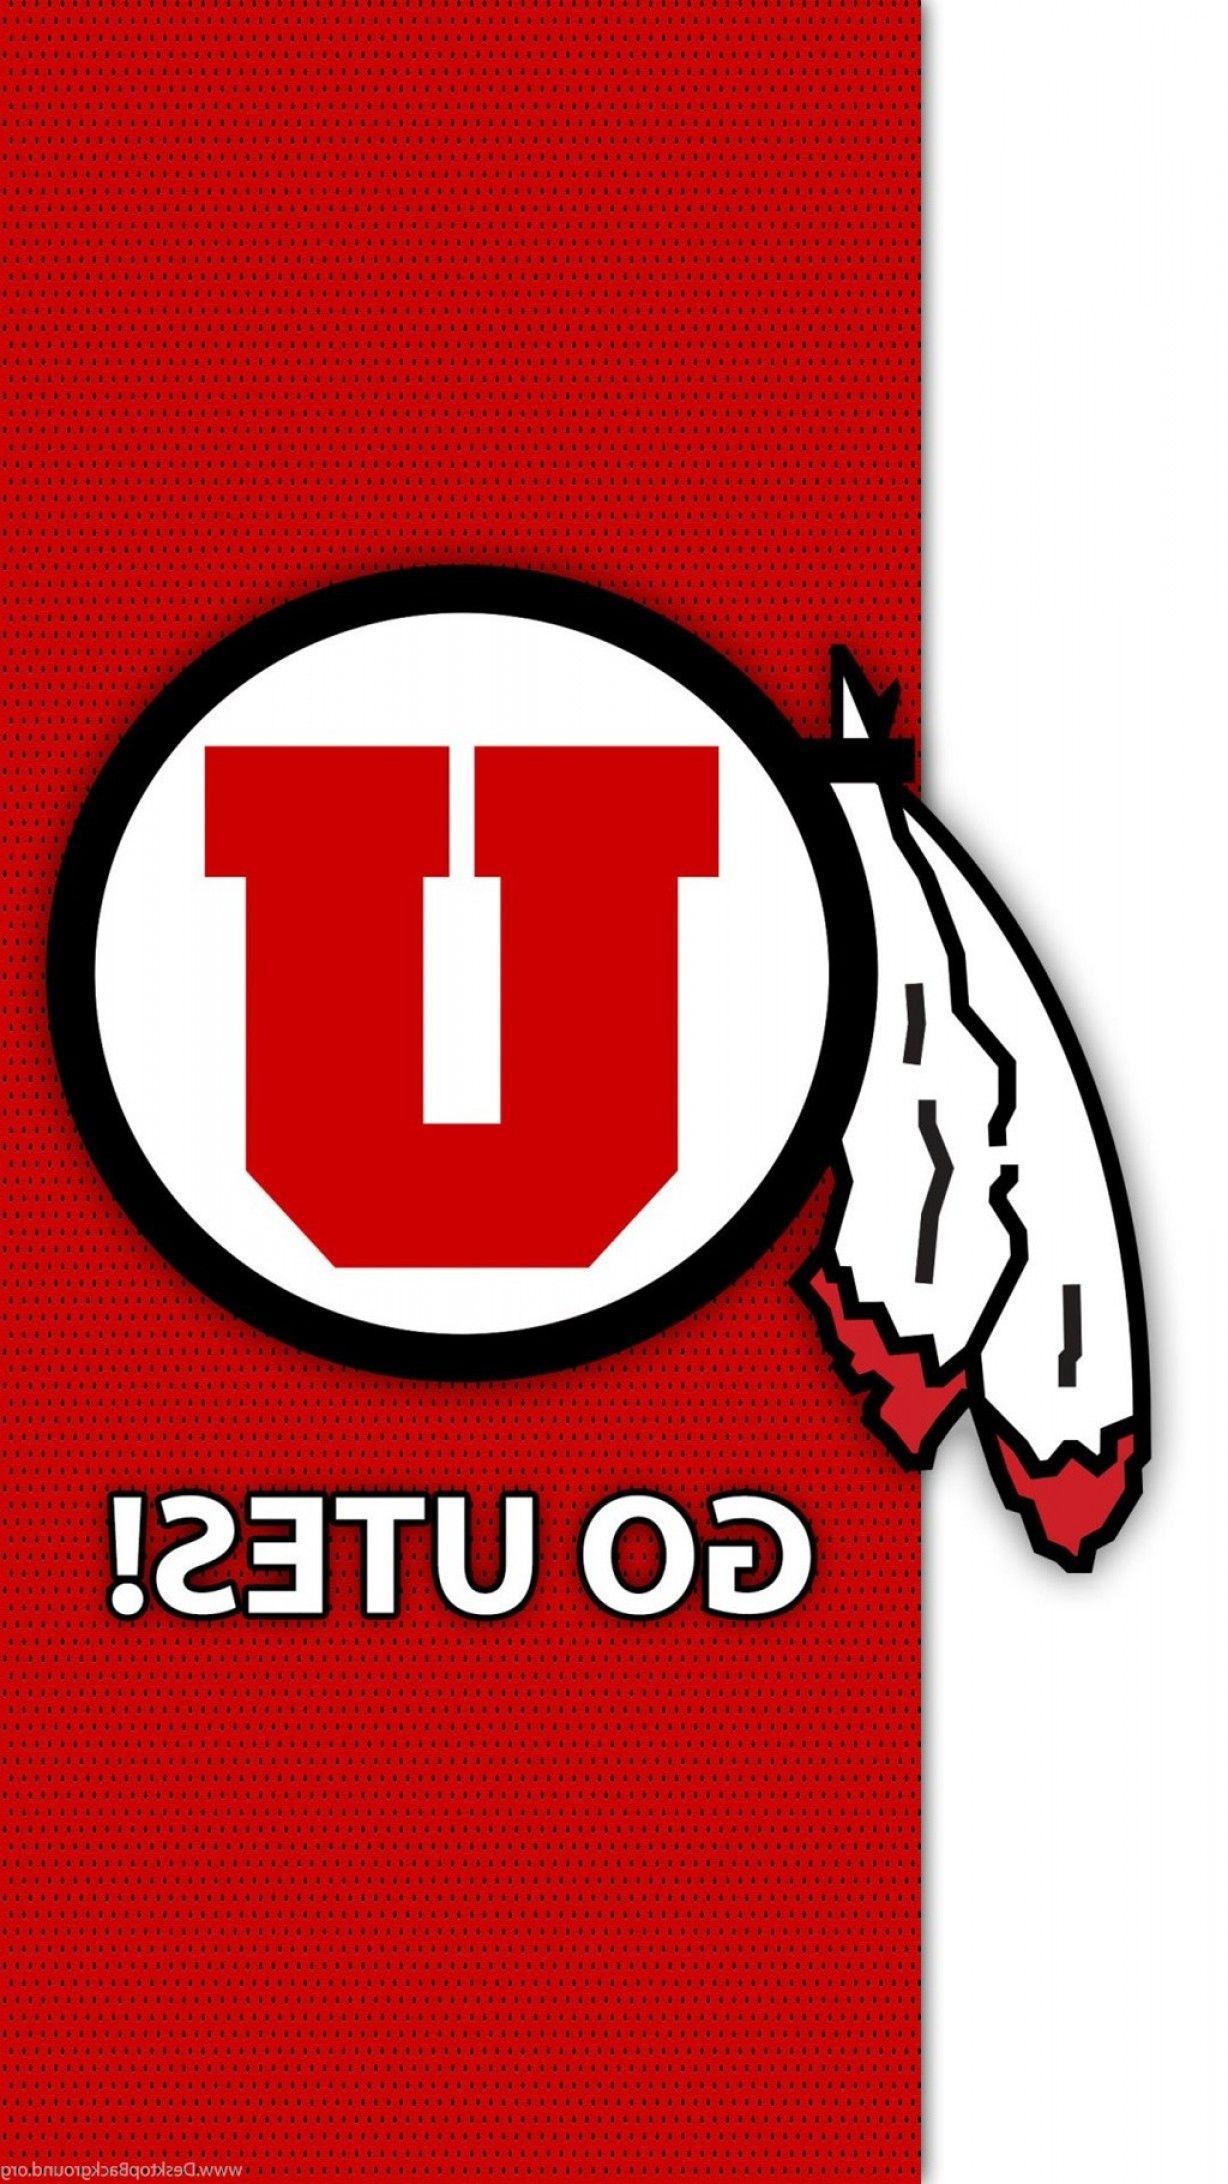 The Utes Logo - Utah Utes A Cell Phone Wallpaper Based On The Logo